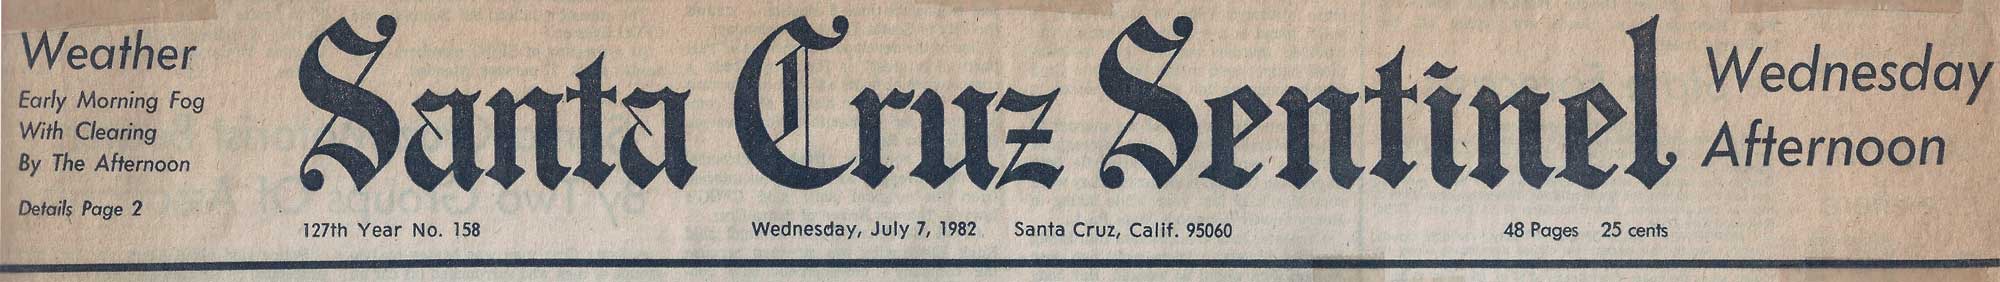 Santa Cruz Sentinel front page